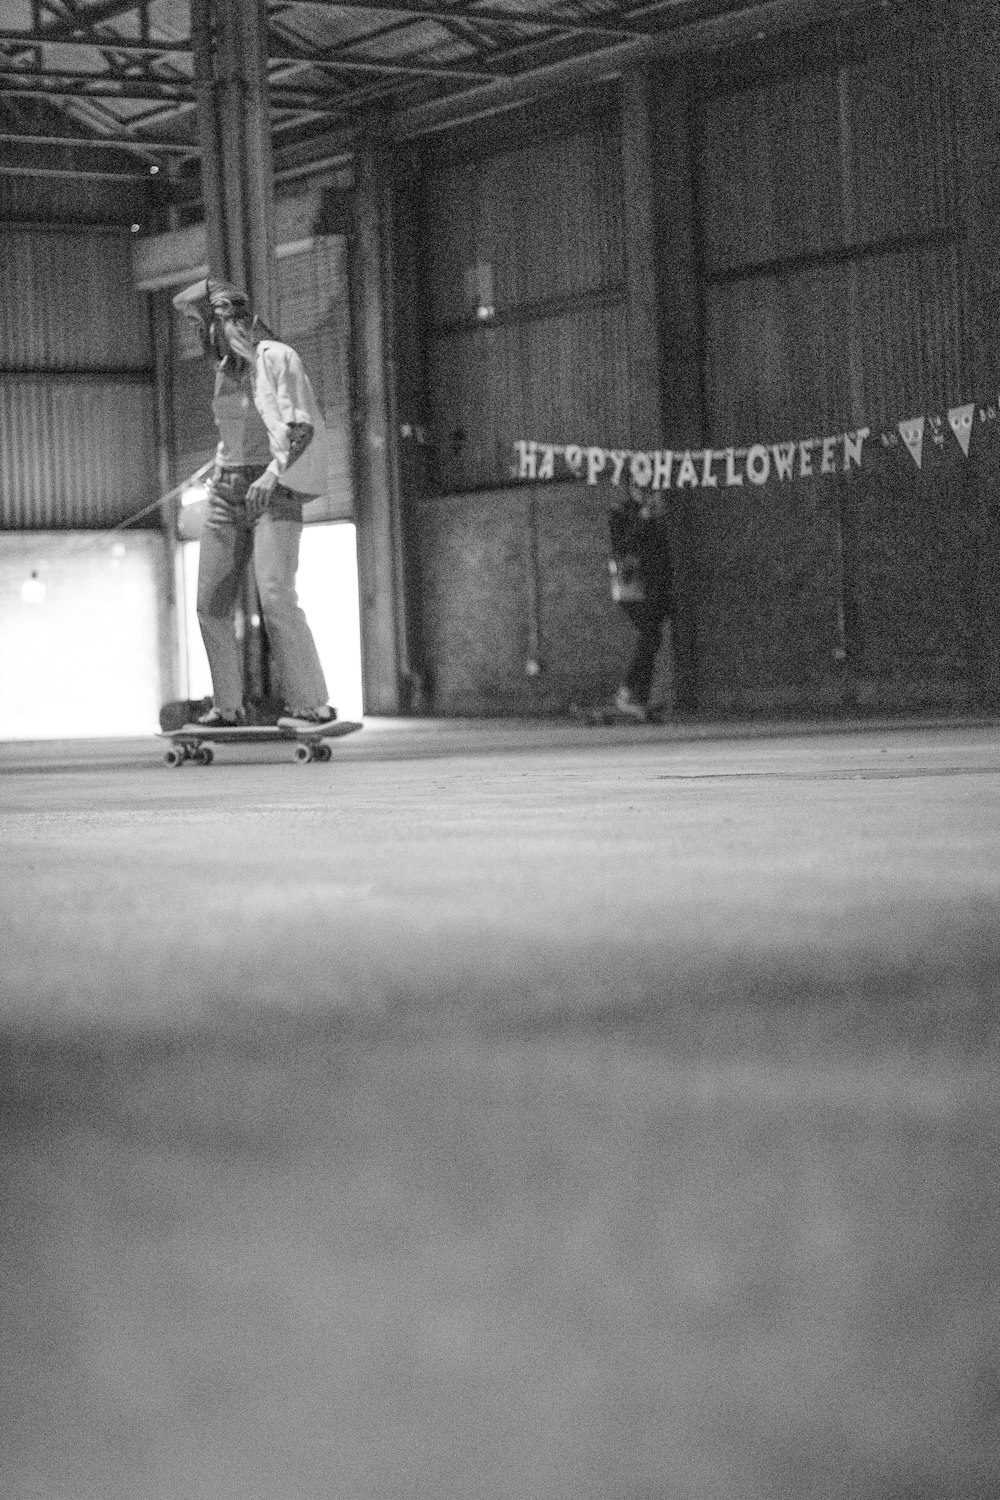 a man riding a skateboard inside of a warehouse